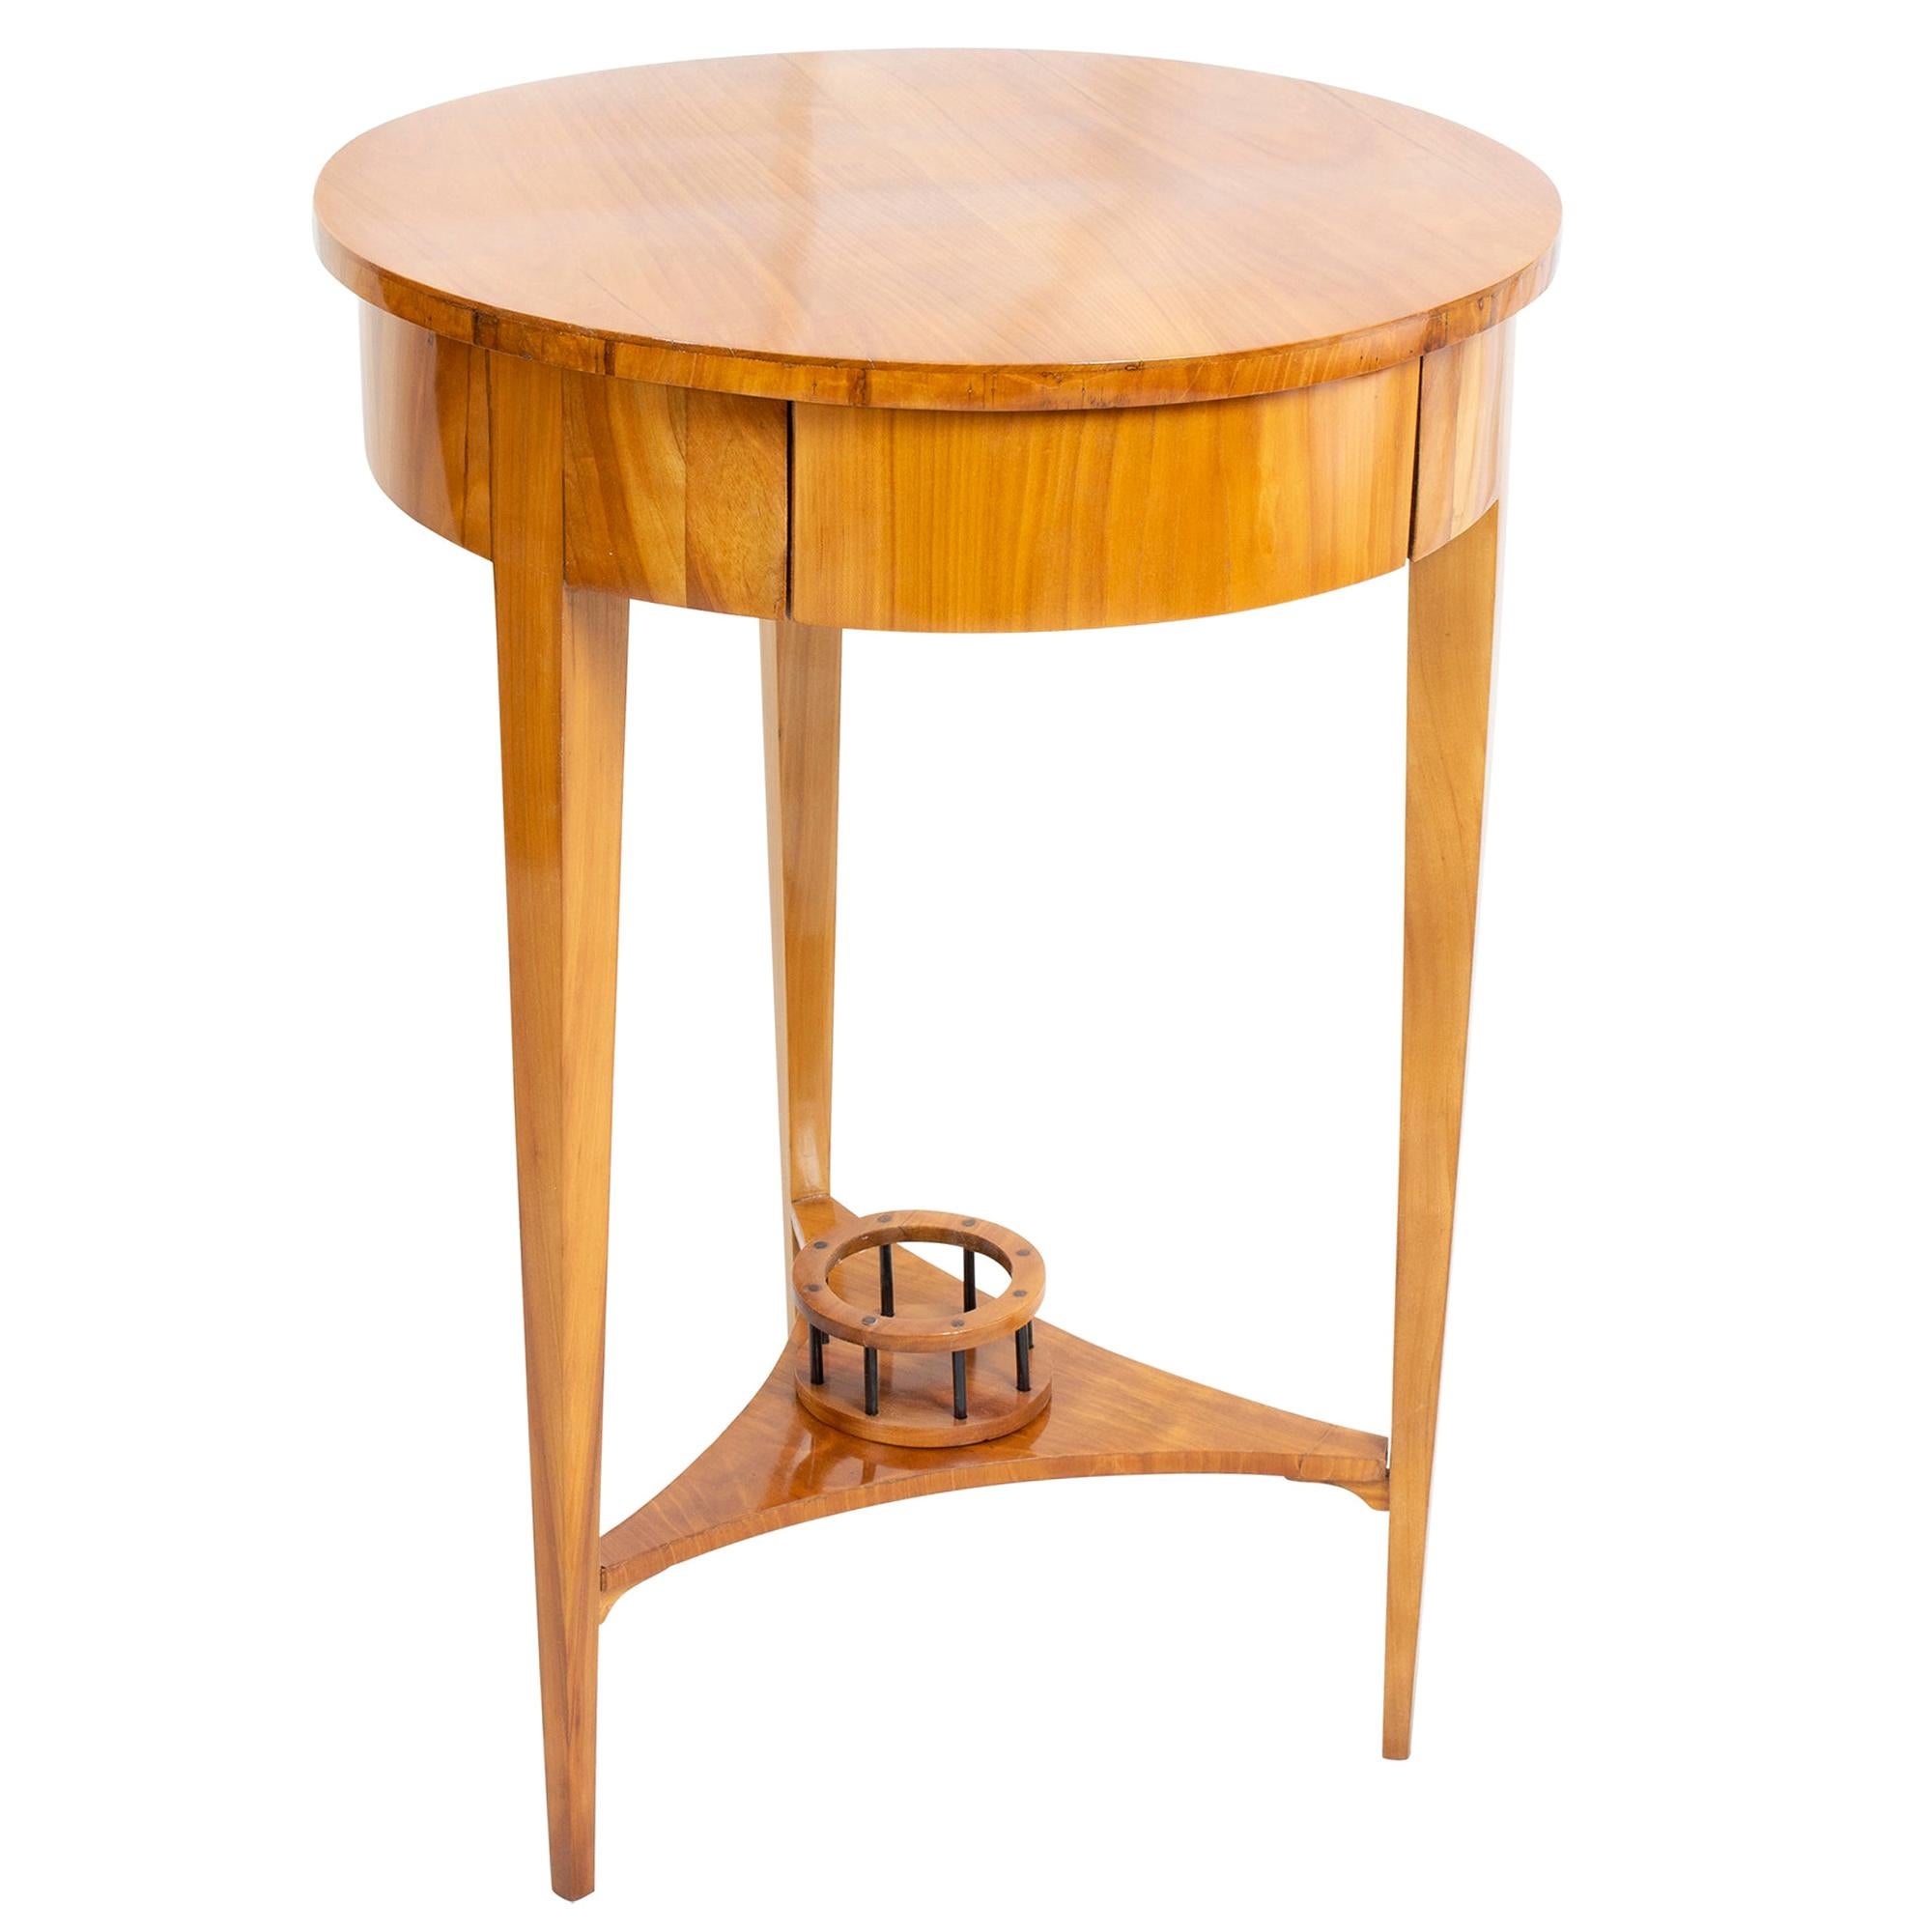 19th Century Biedermeier Round Drum Sewing Table